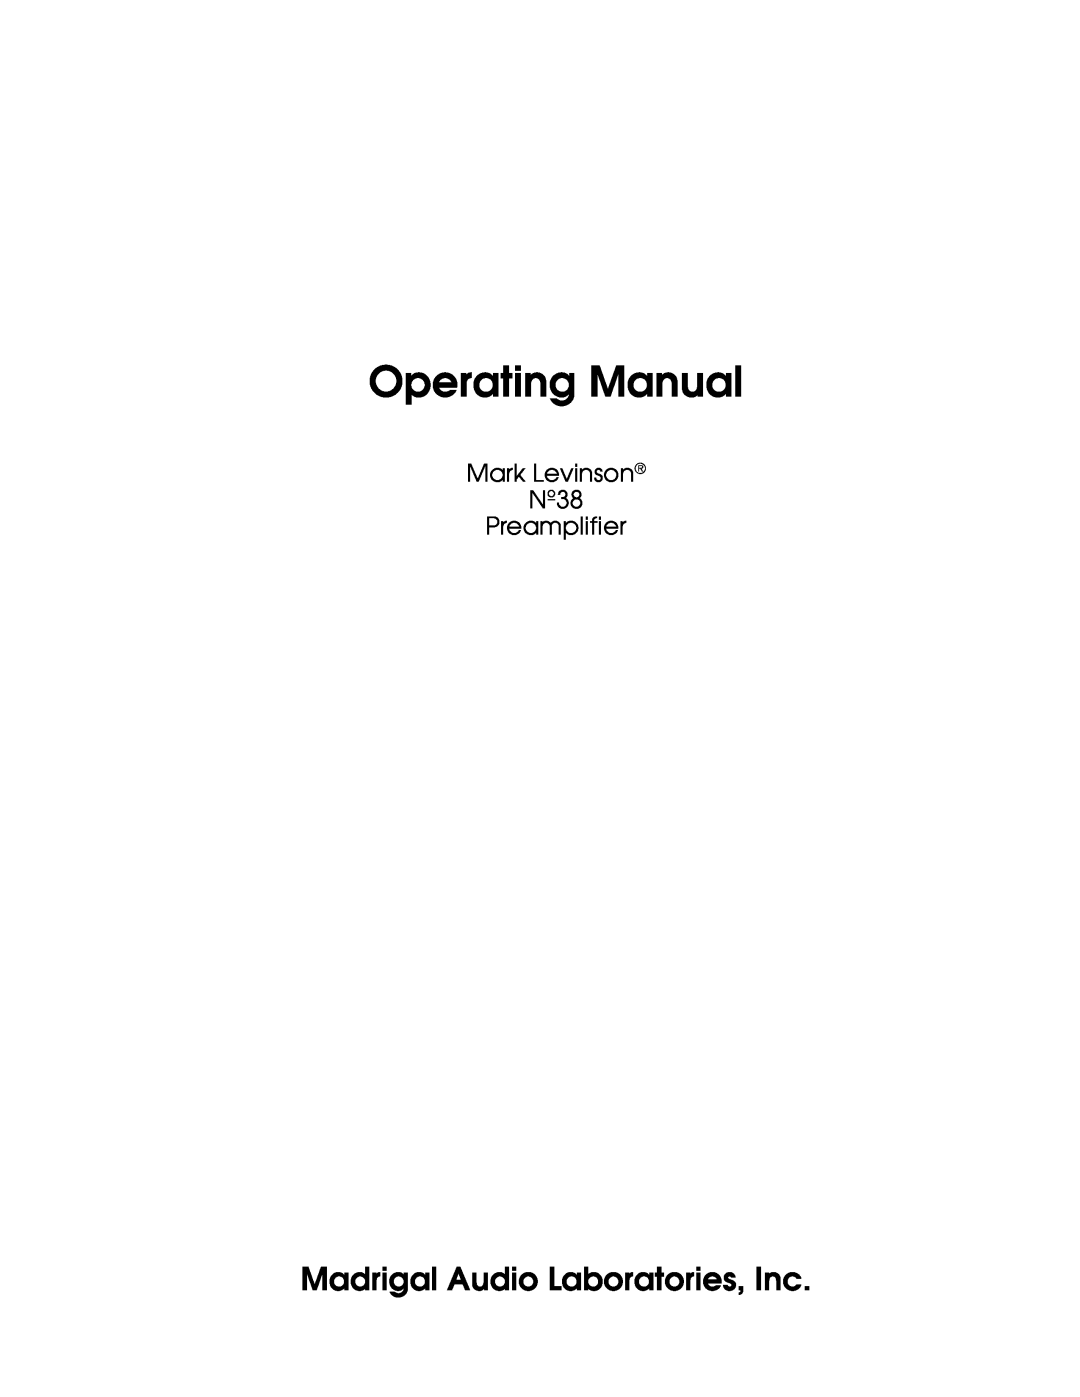 Madrigal Imaging N38 manual Operating Manual, Madrigal Audio Laboratories, Inc, Mark Levinson Nº38 Preamplifier 